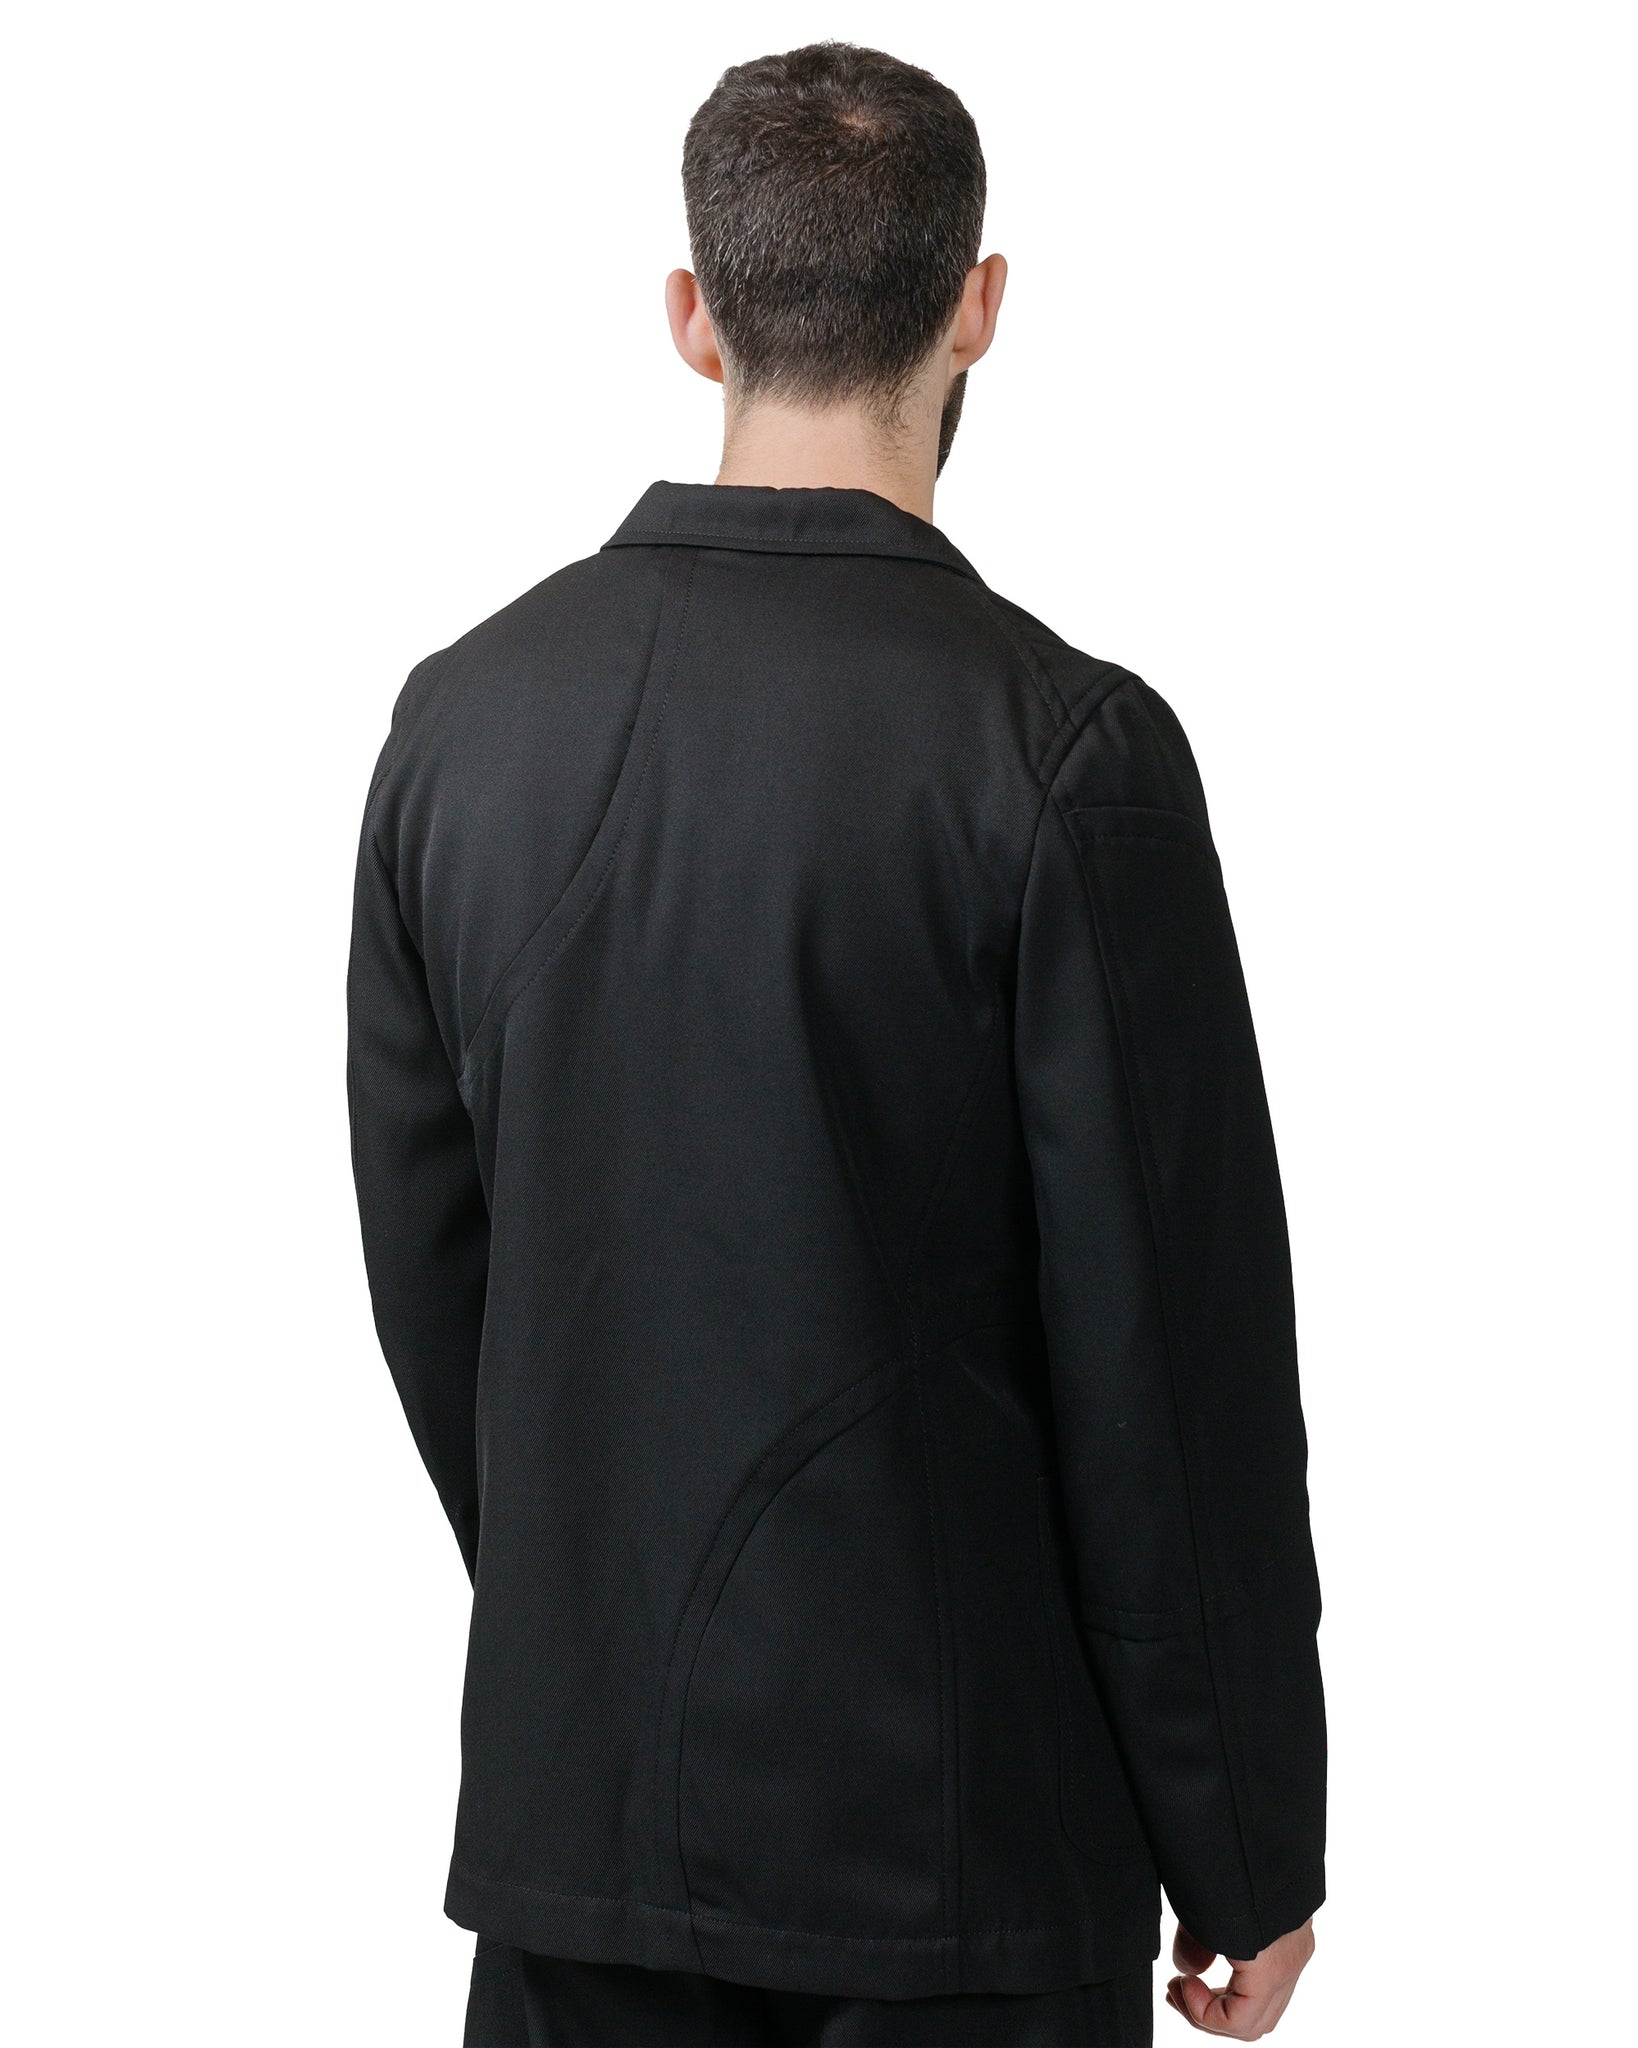 Comme des Garçons SHIRT Woven Jacket Black model back